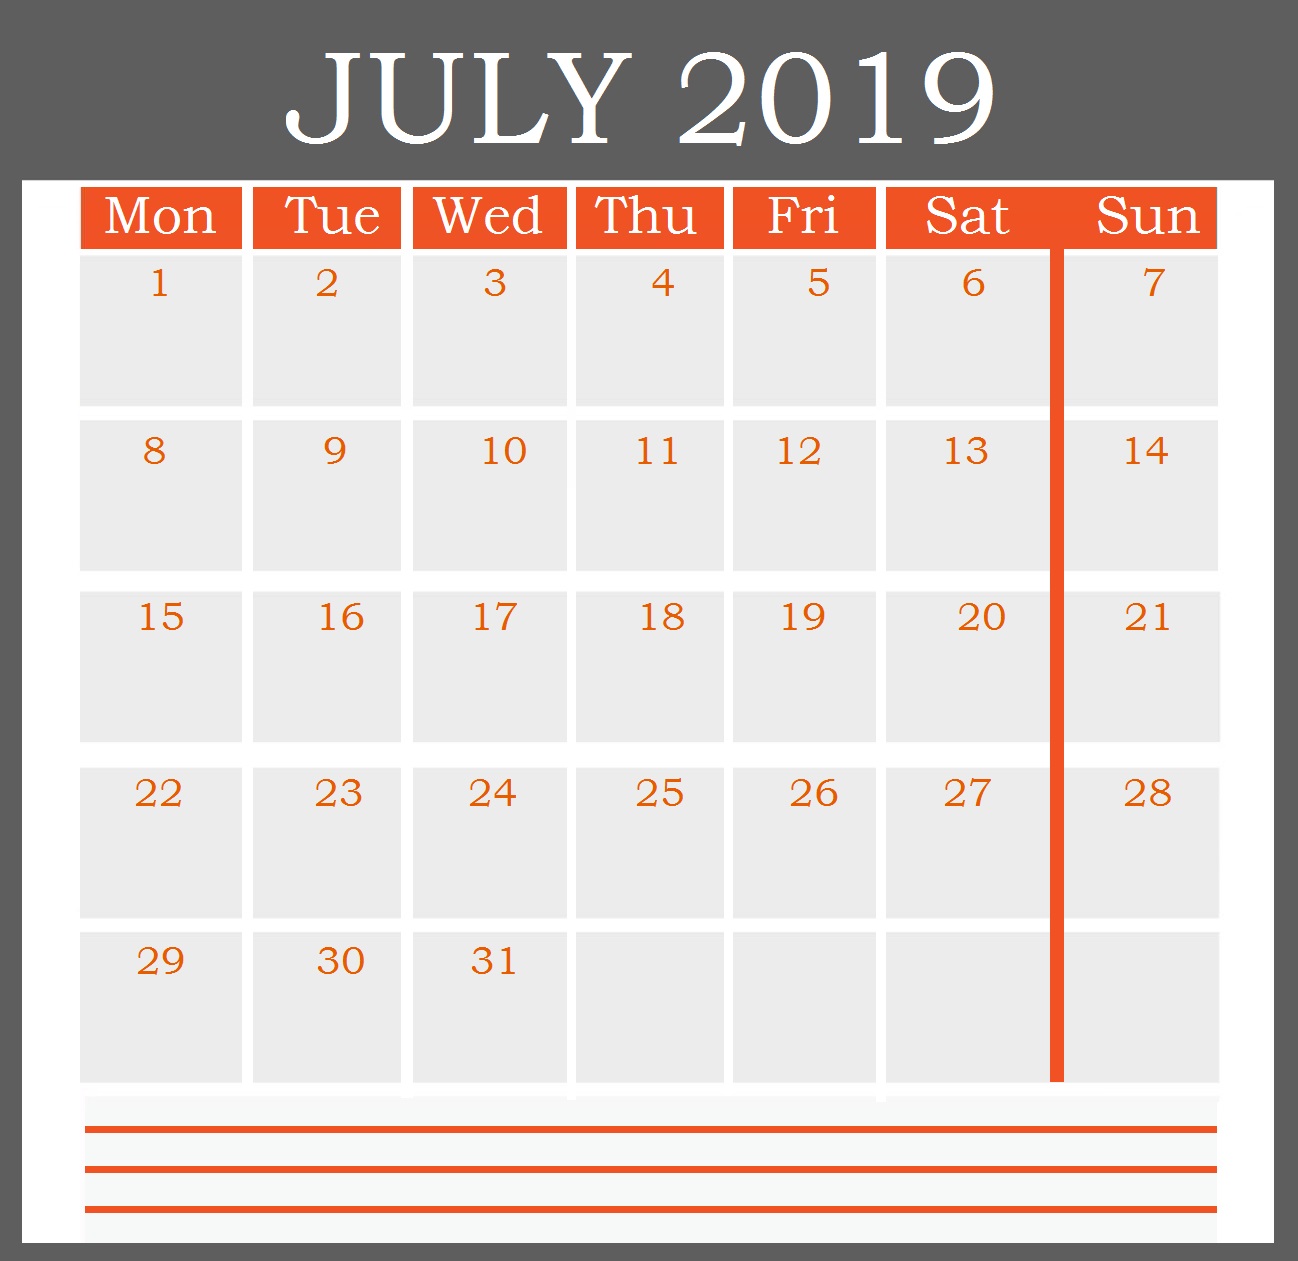 July 2019 Office Desk Calendar